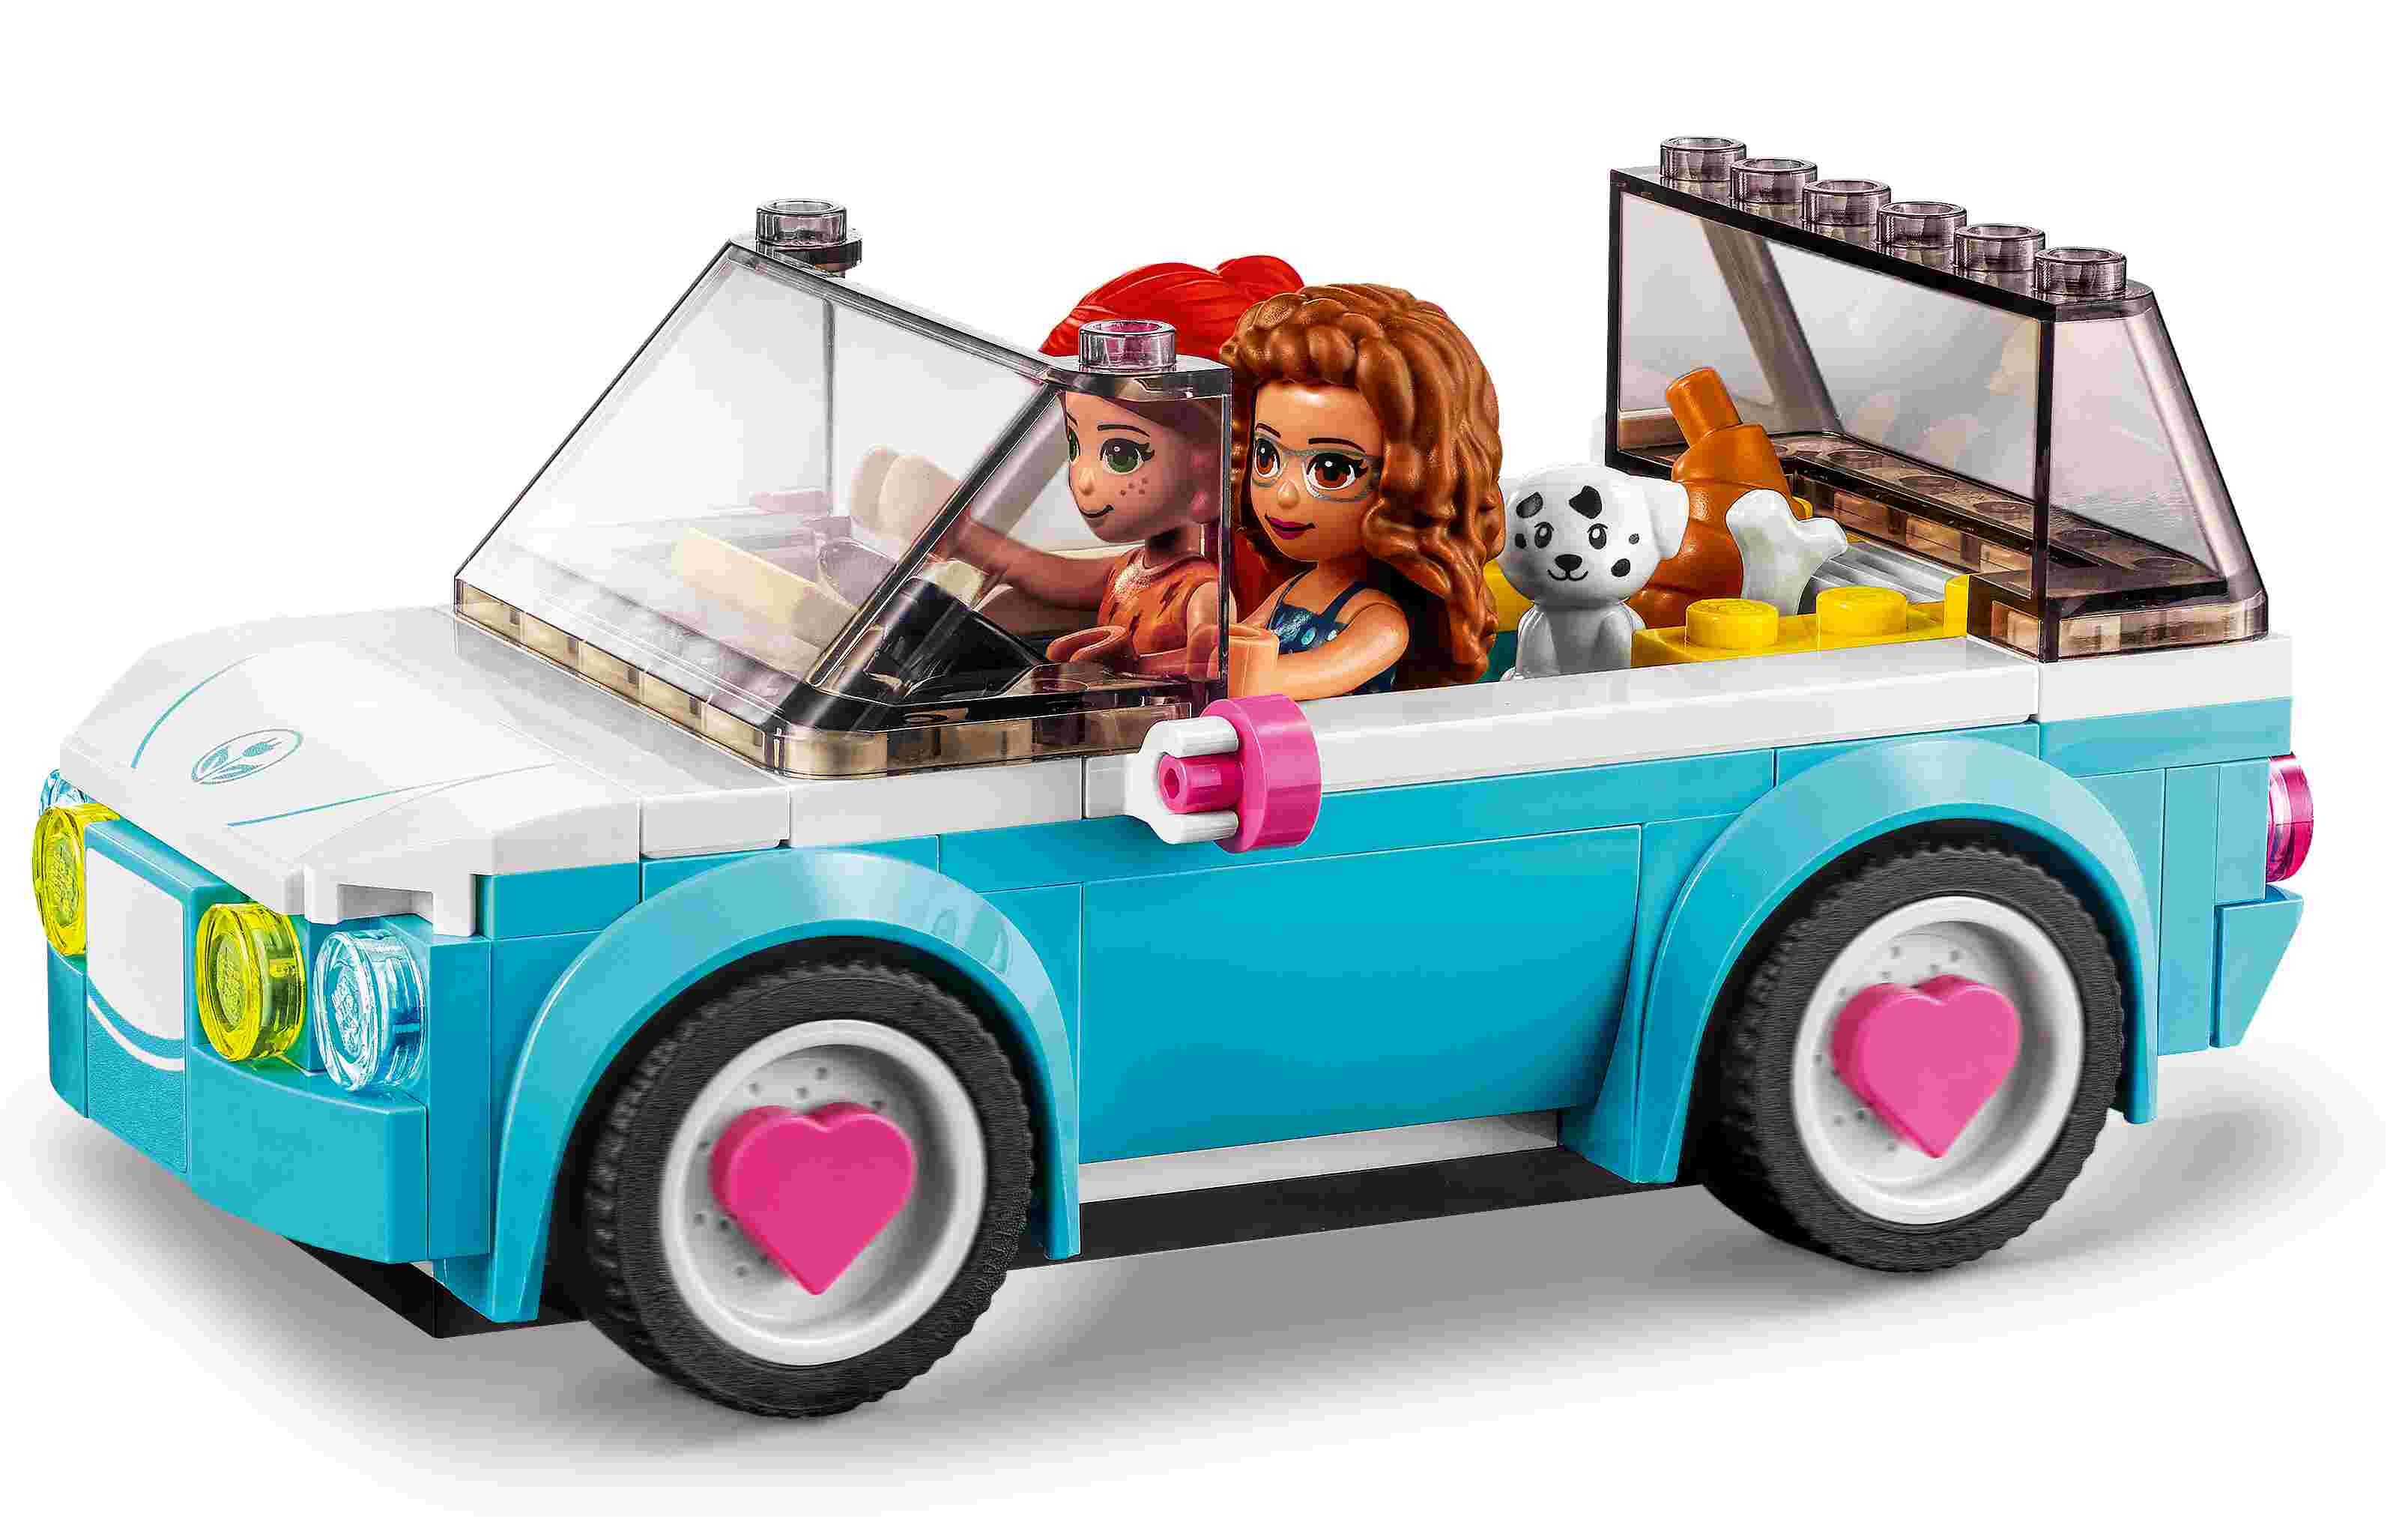 LEGO 41443 Friends Olivias Elektroauto Set mit Olivia & Mia und Spielzeugauto